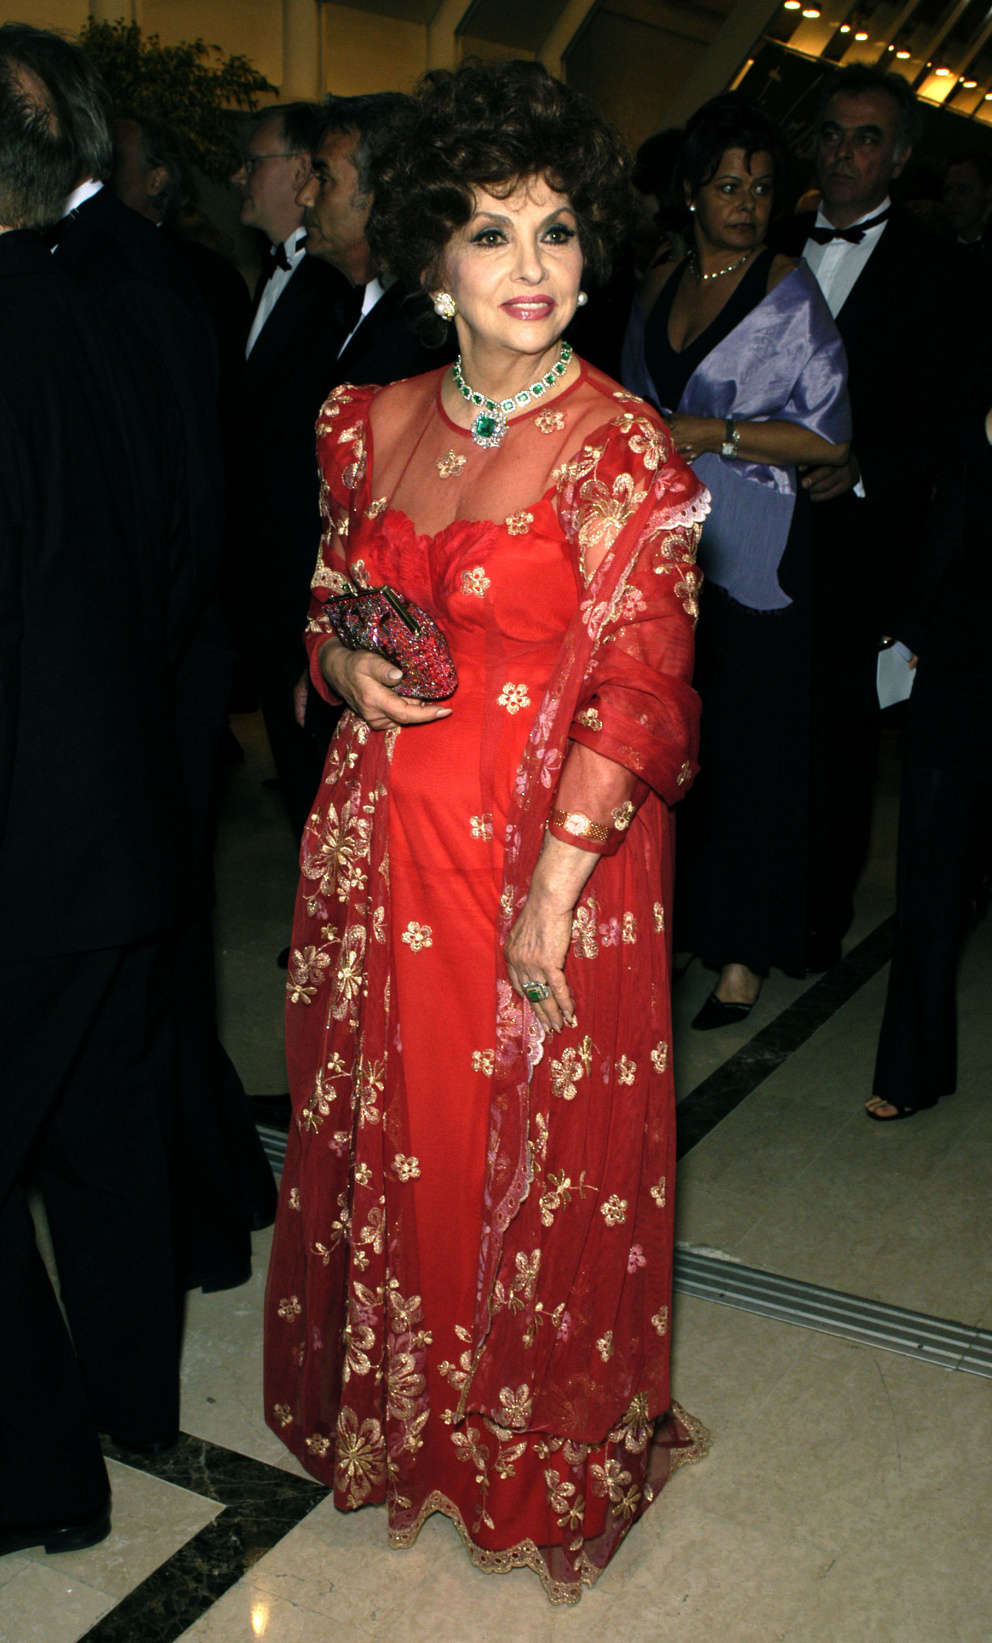 Gina Lollobrigida během filmového festivalu v Cannes 2003 